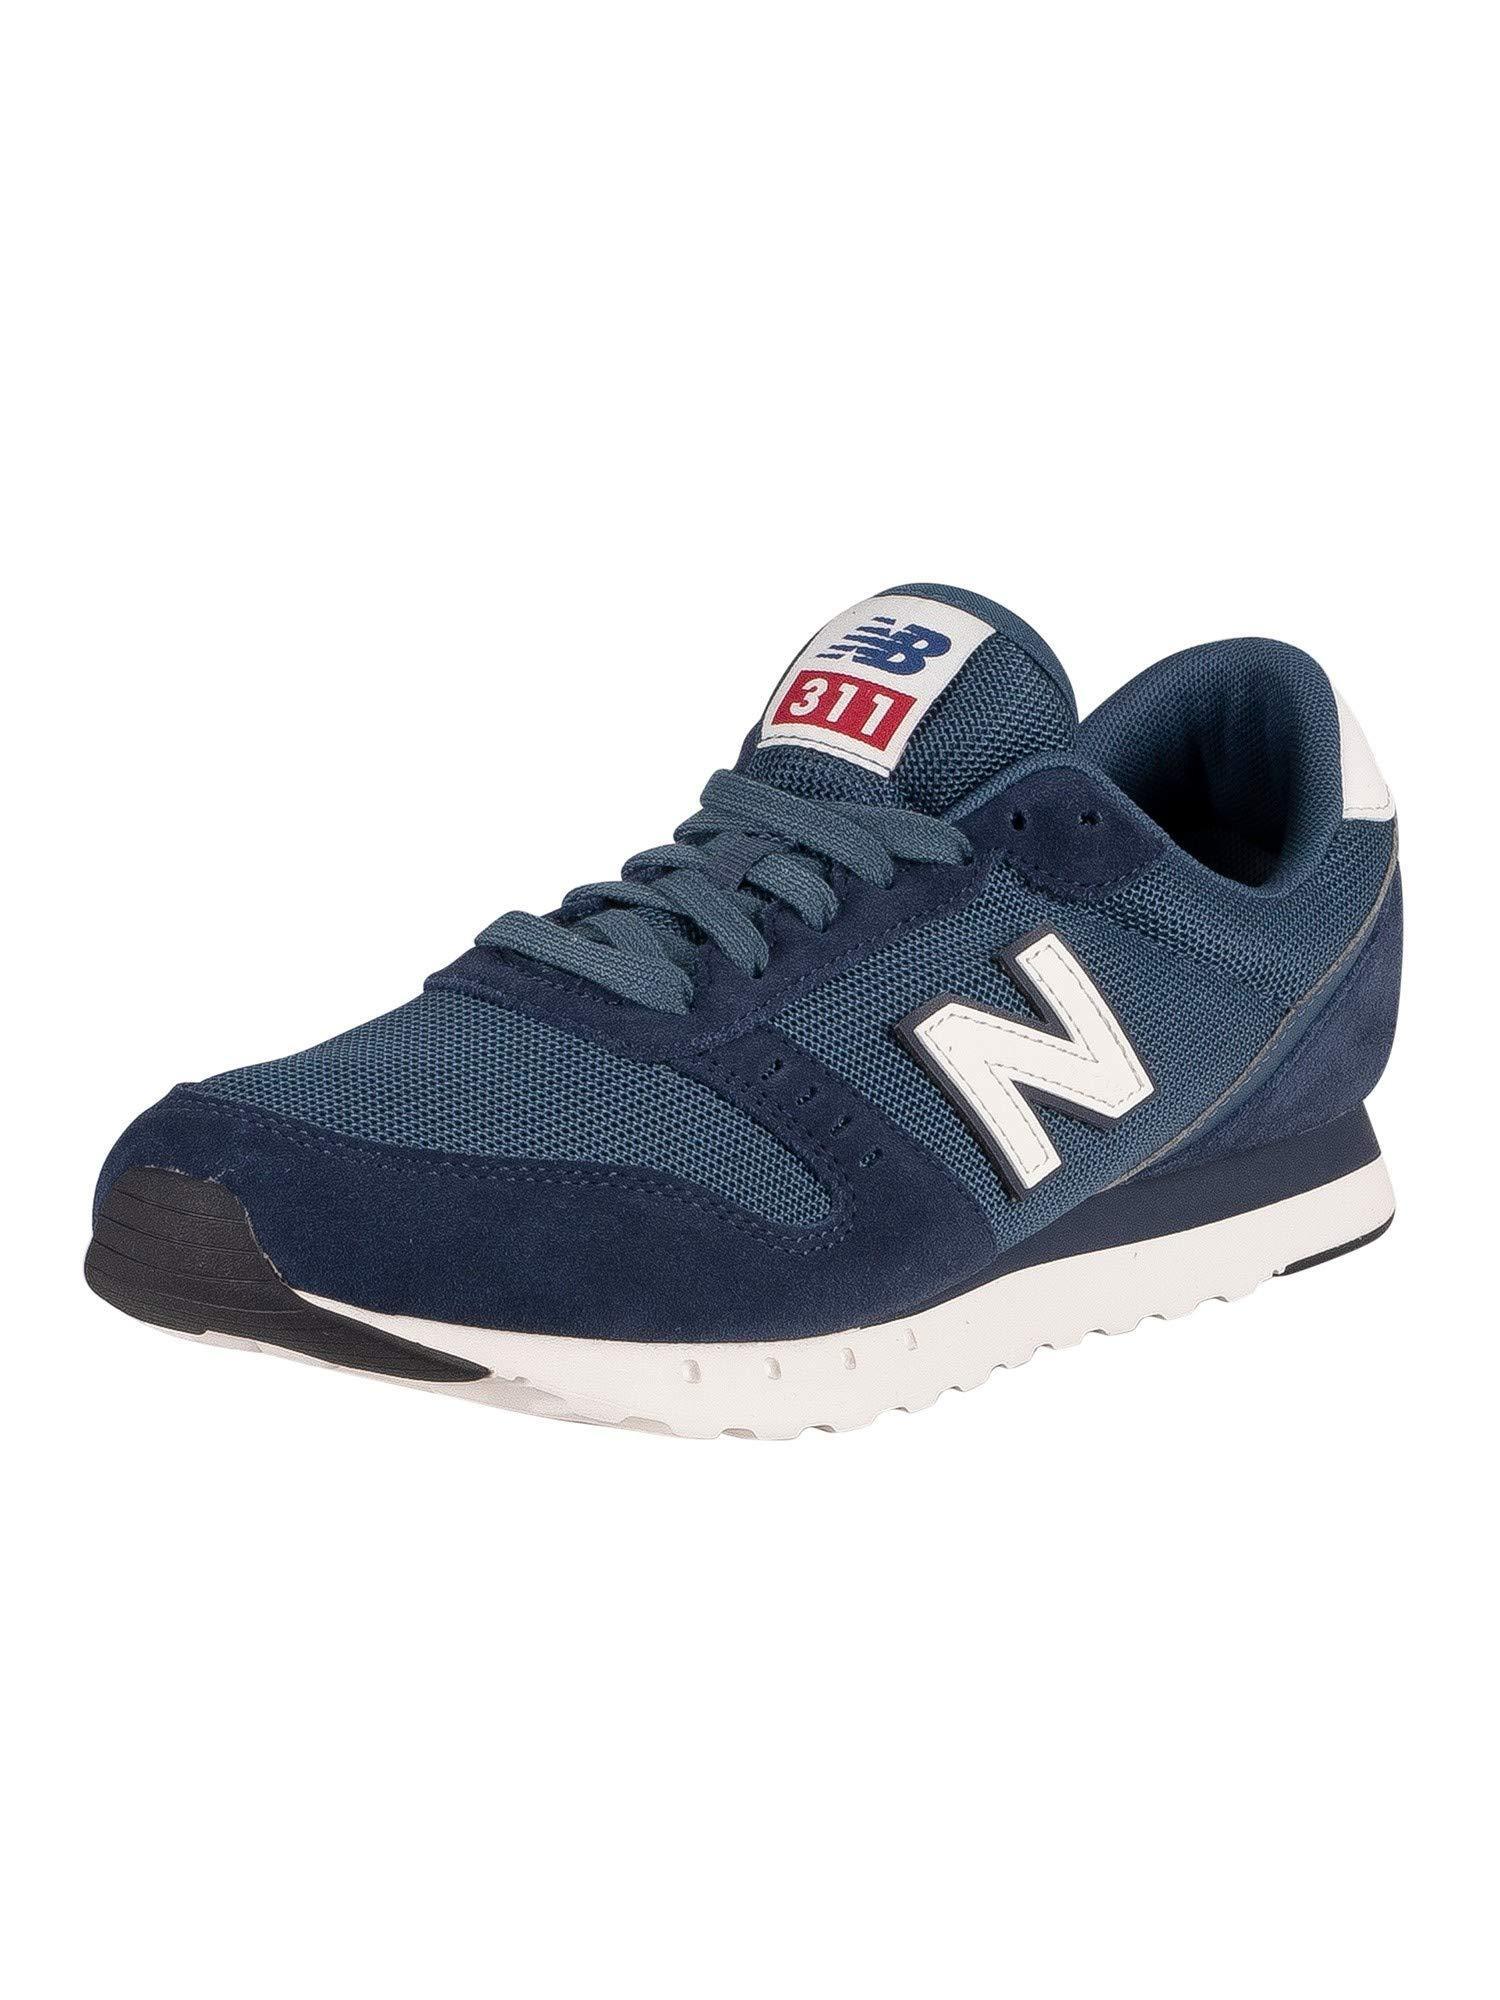 New Balance Suede Mens 311 V2 Sneaker in Natural Indigo/Stone Blue ...